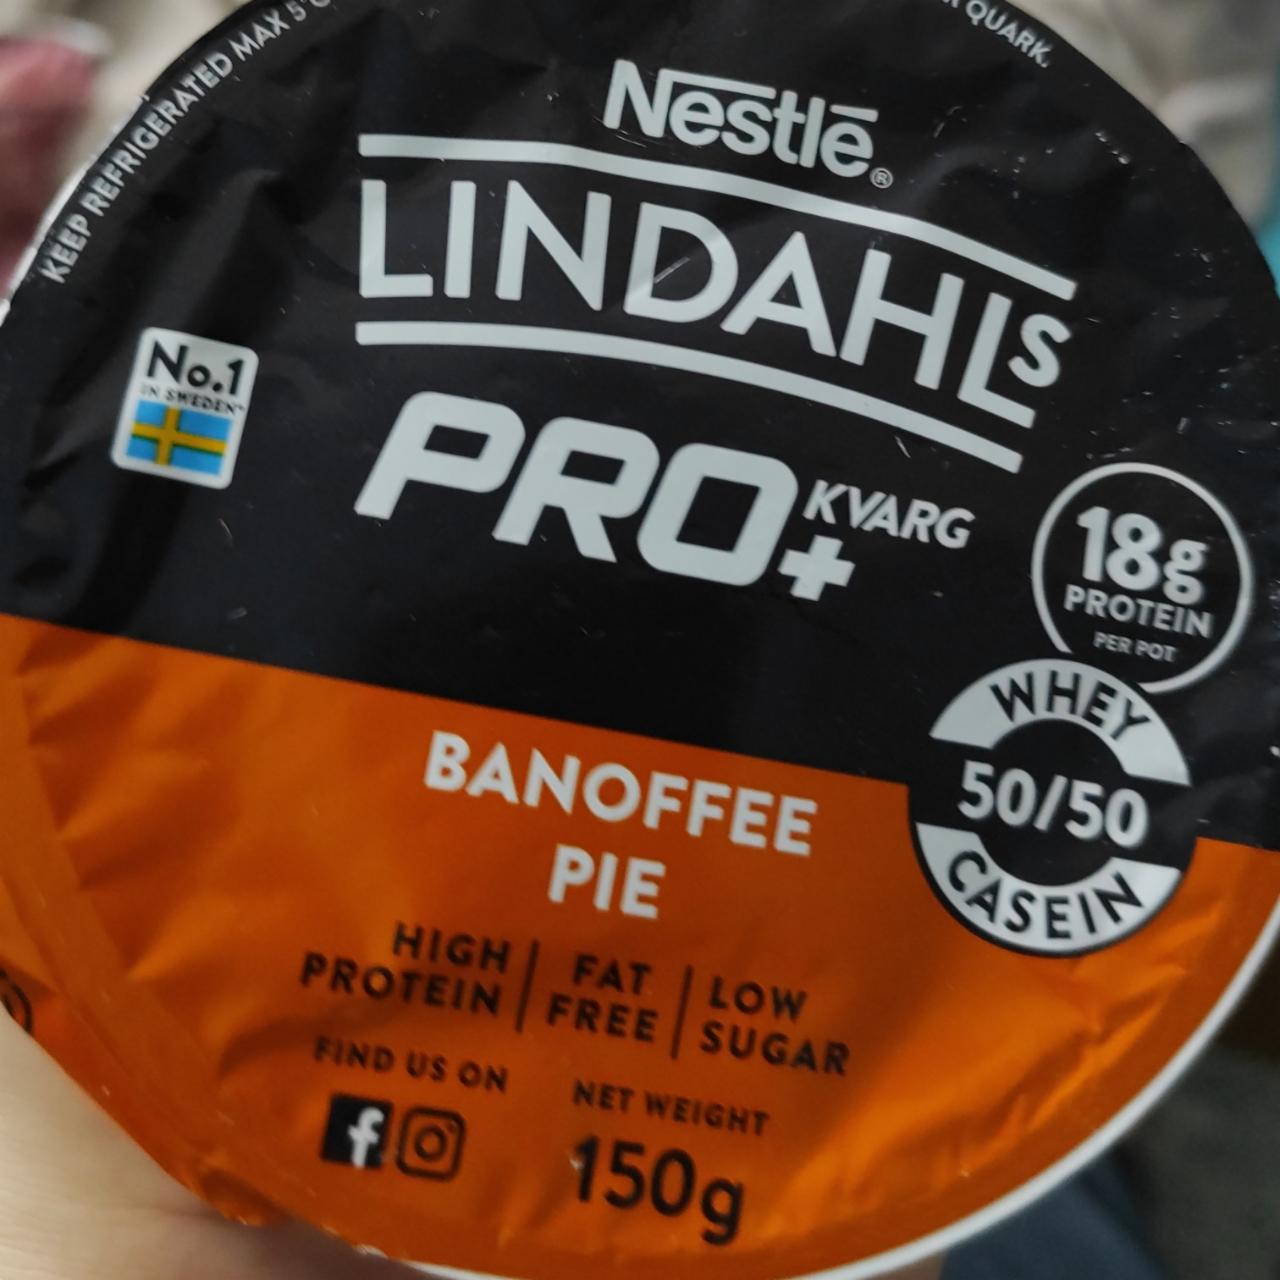 Lindahl's Pro Plus Banoffee Fat Free Quark 150G